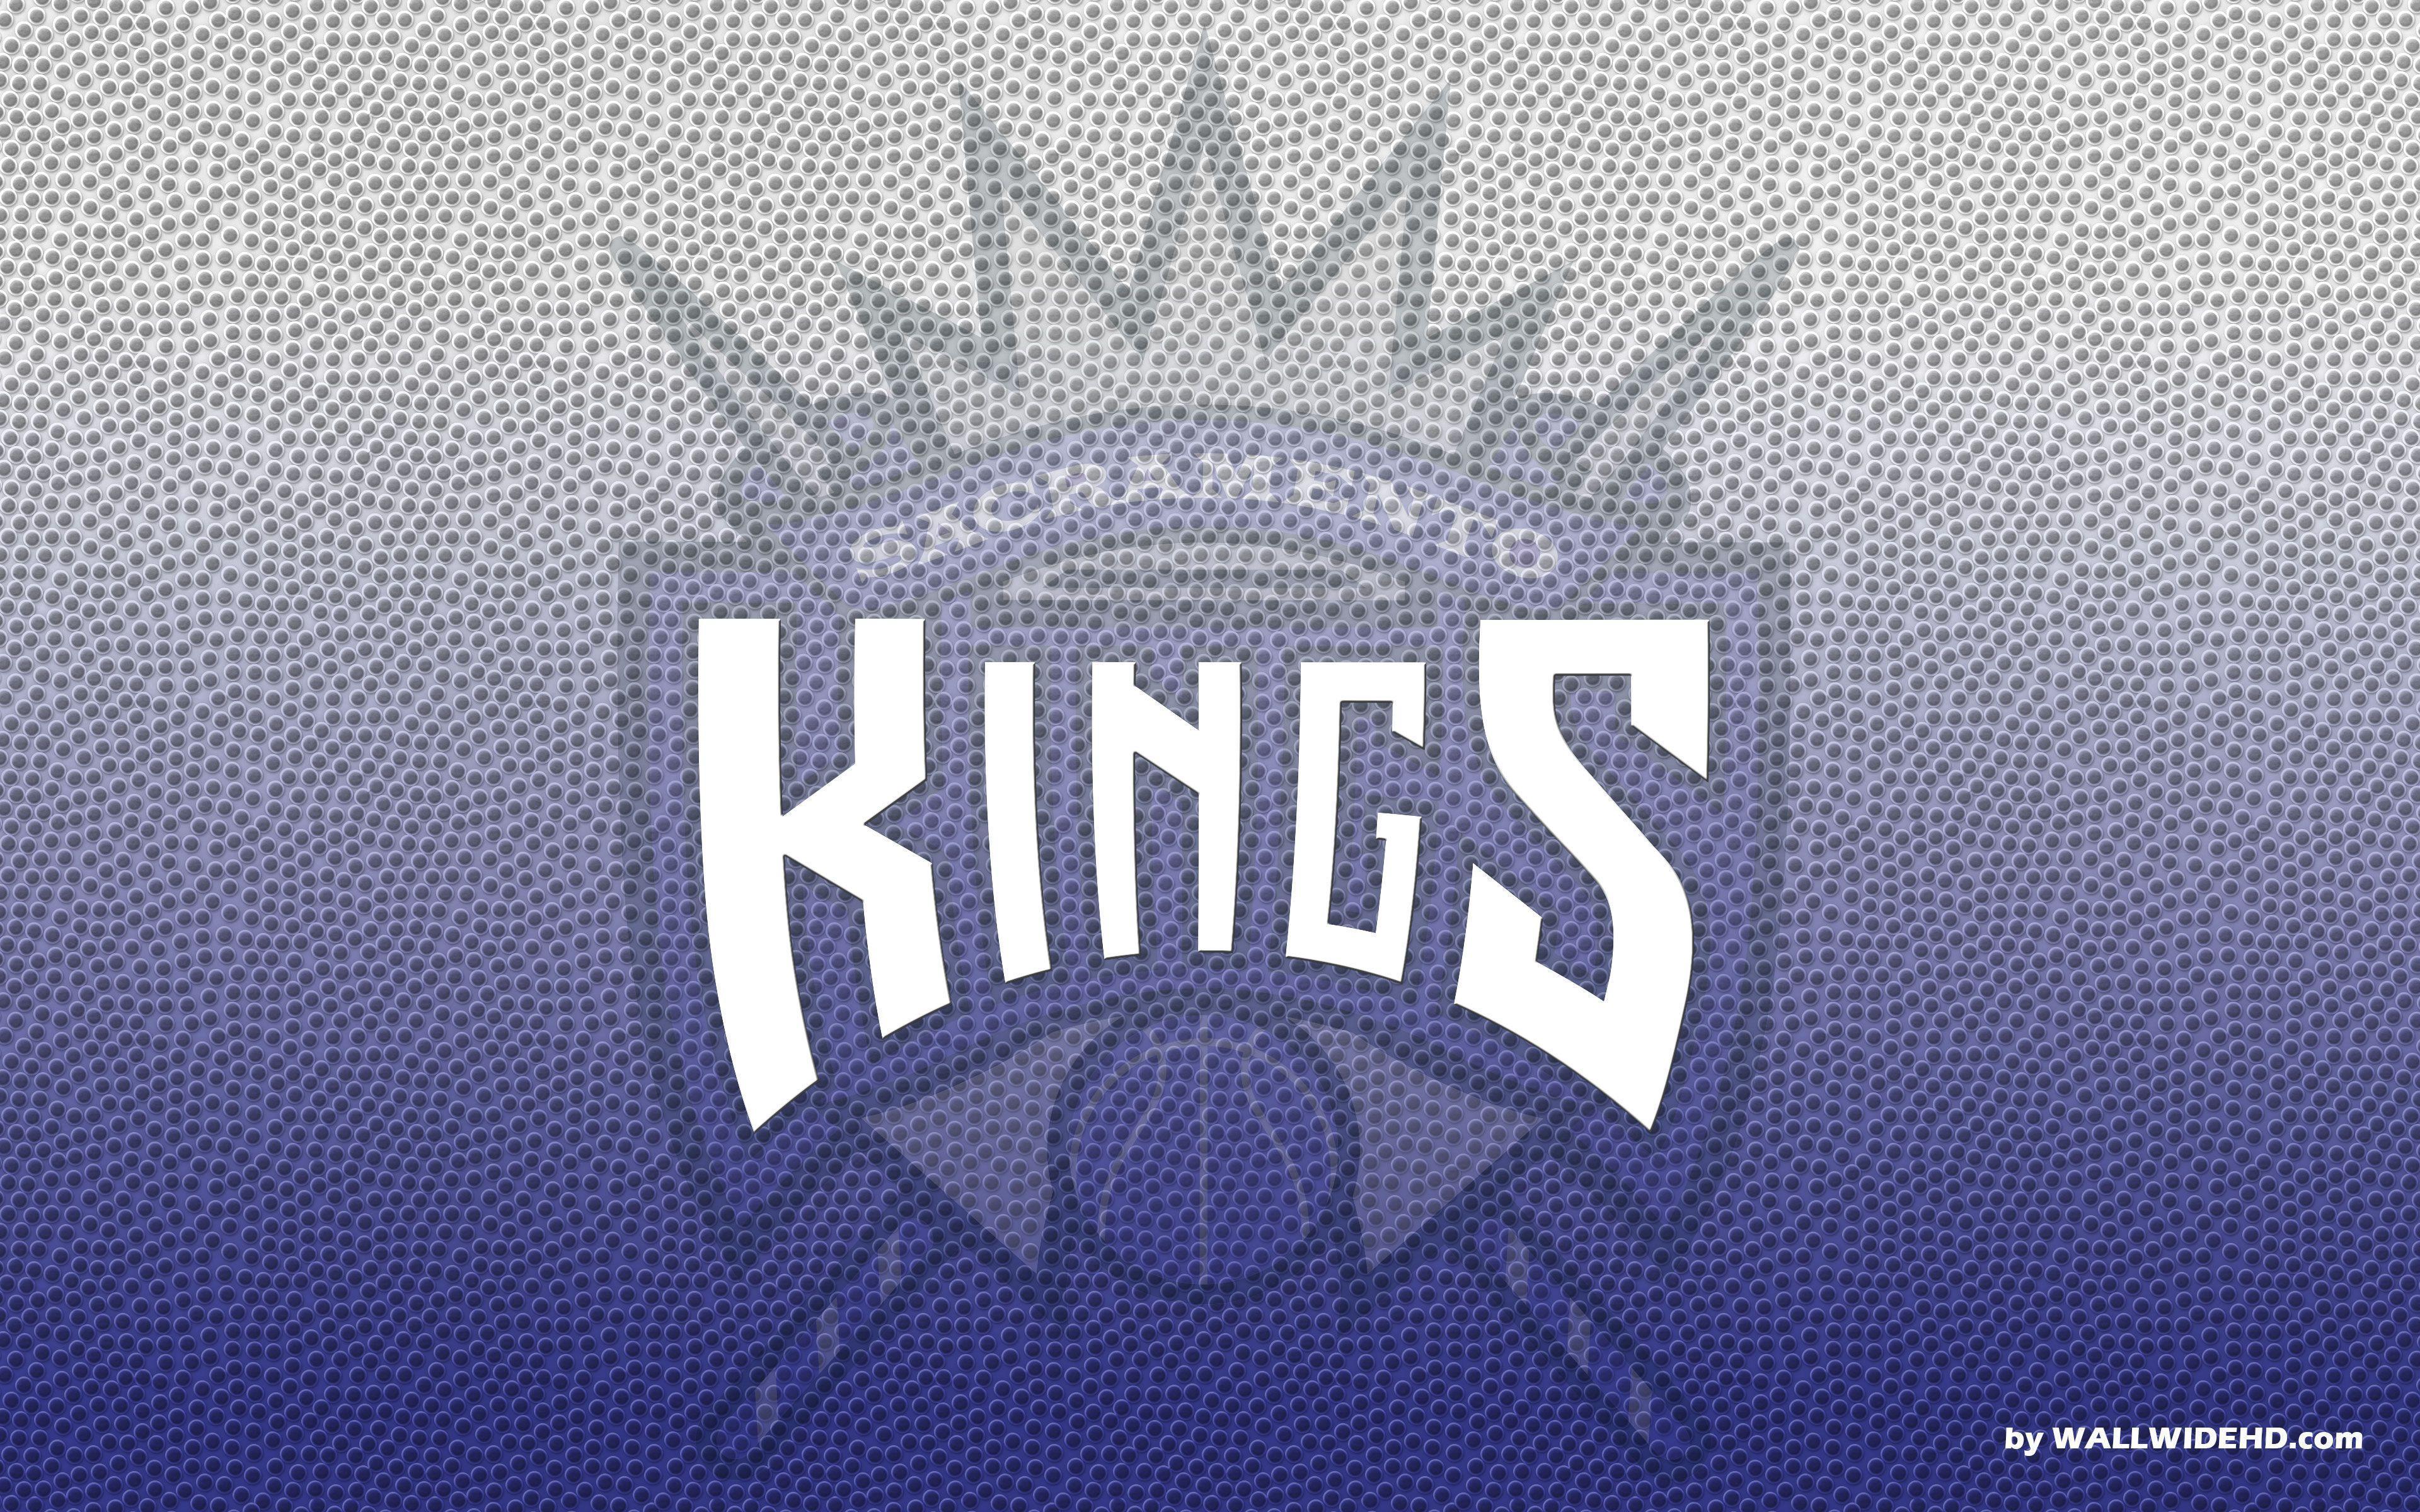 Sacramento Kings Wallpaper. Full HD Picture